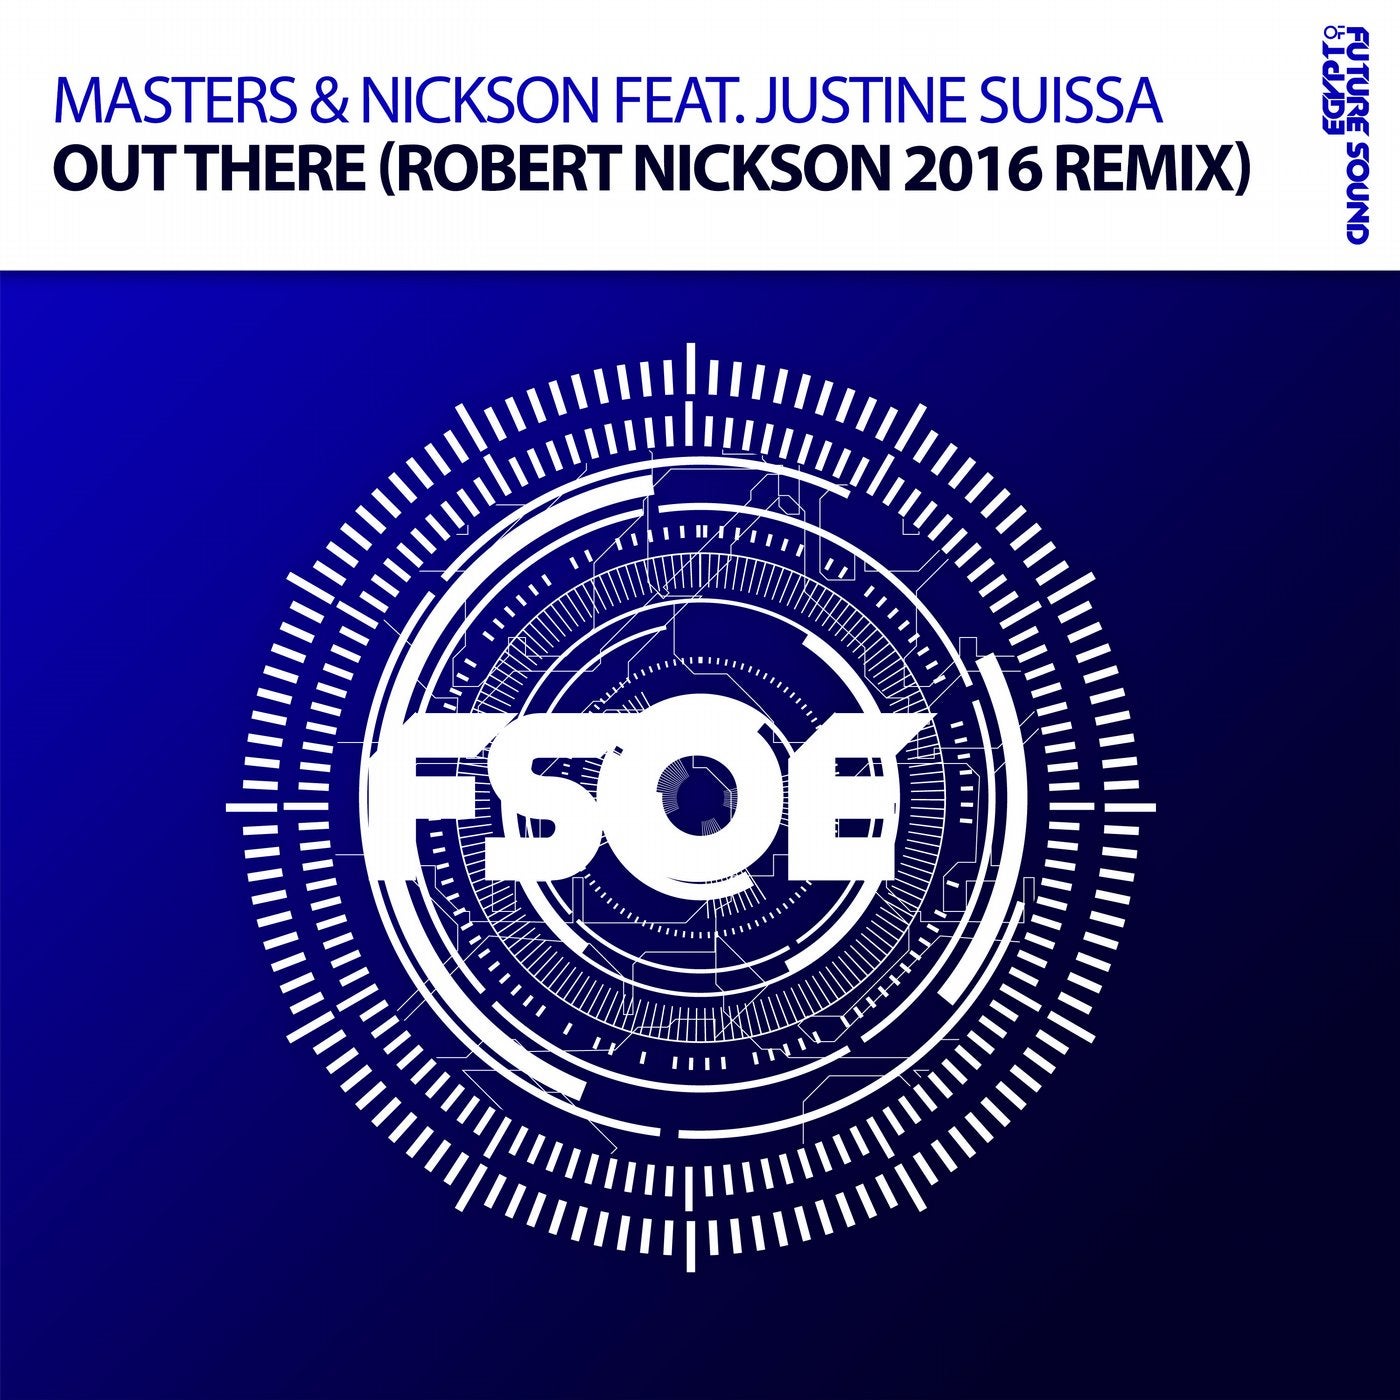 Justine Suissa music download - Beatport